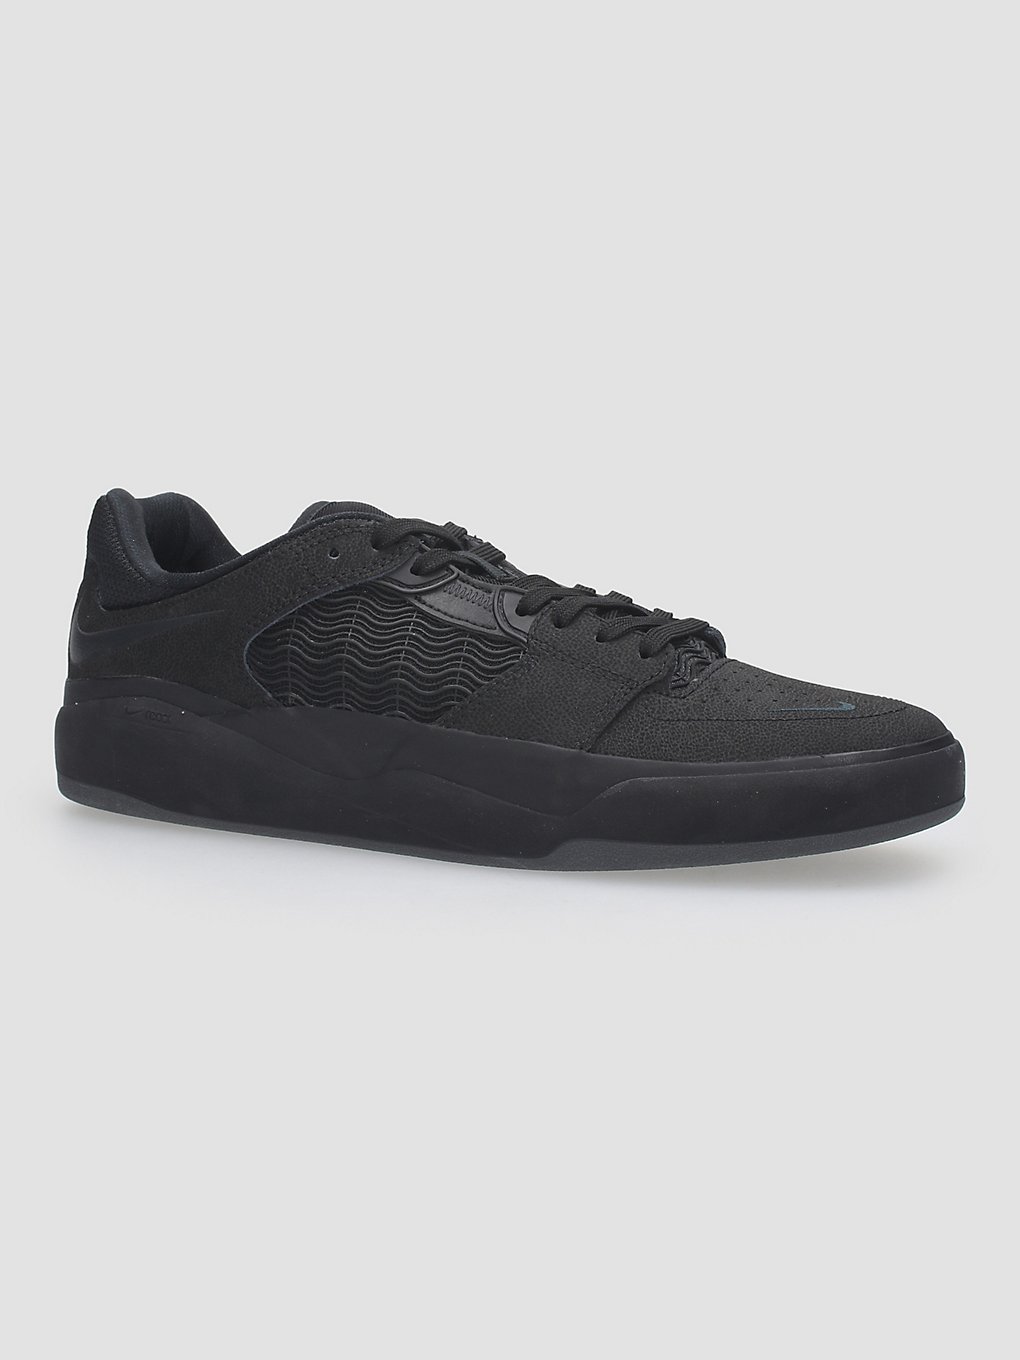 Nike SB Ishod Prm Skateschuhe black kaufen